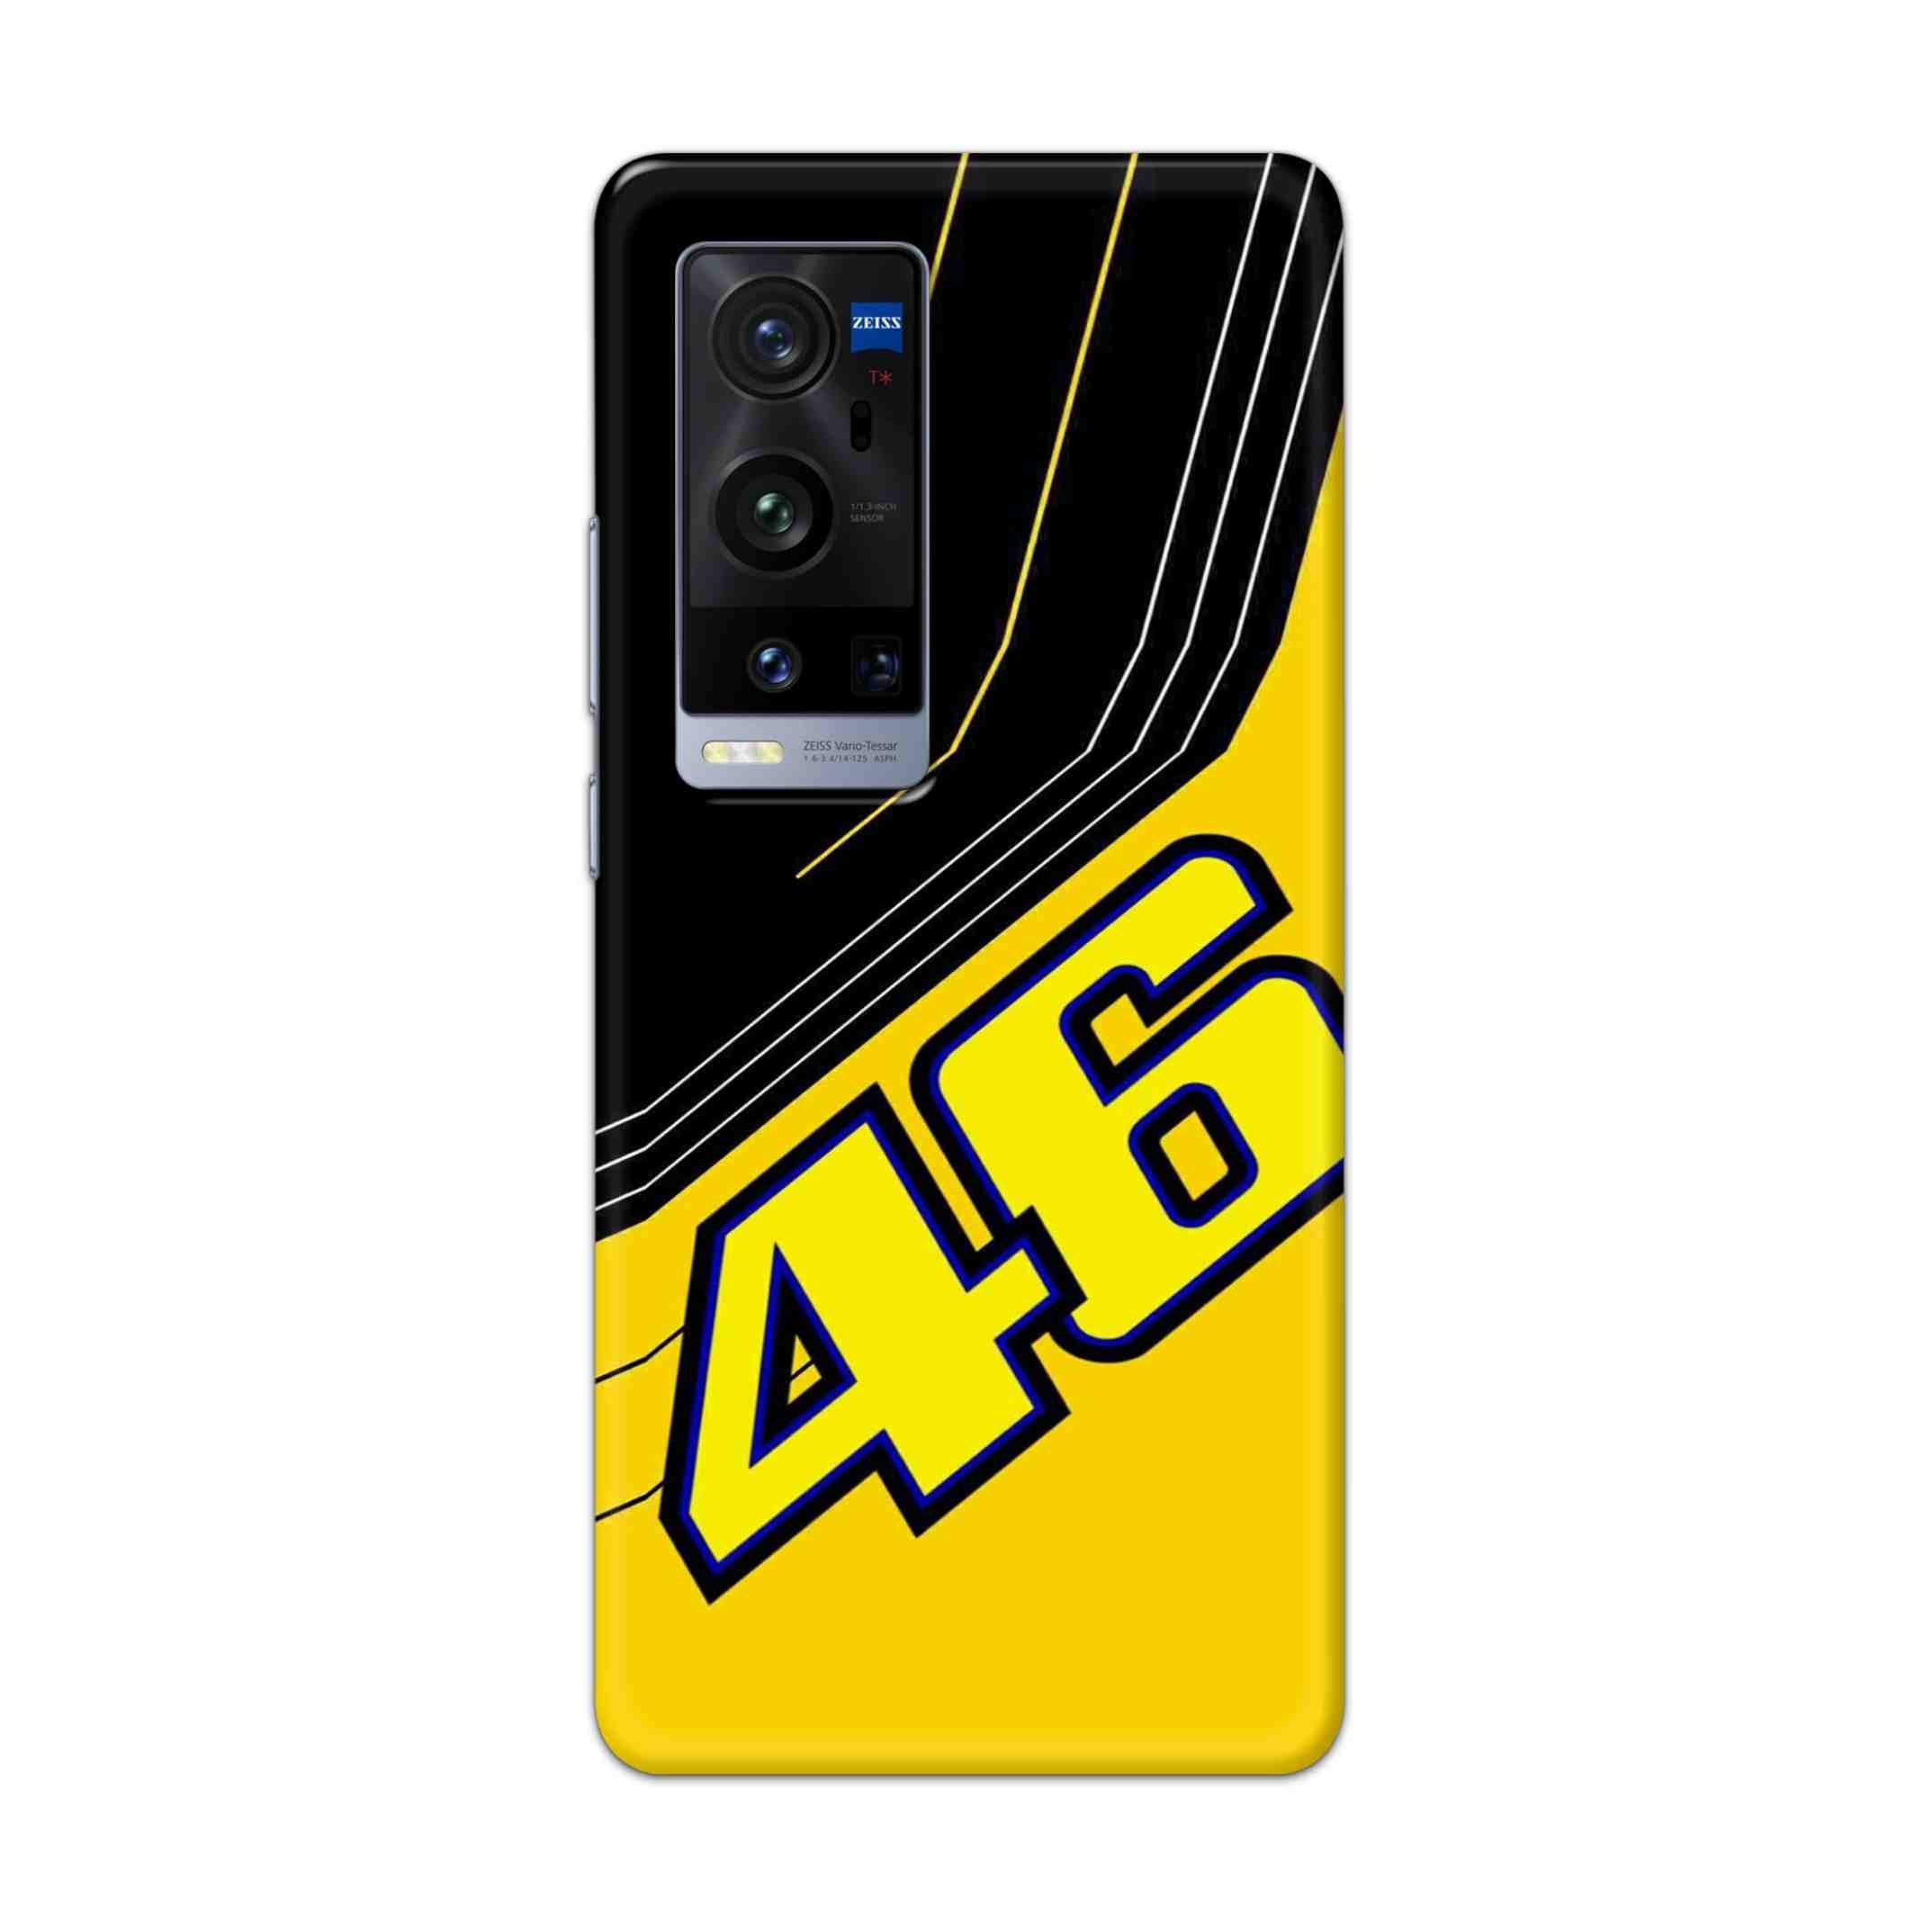 Buy 46 Hard Back Mobile Phone Case Cover For Vivo X60 Pro Plus Online